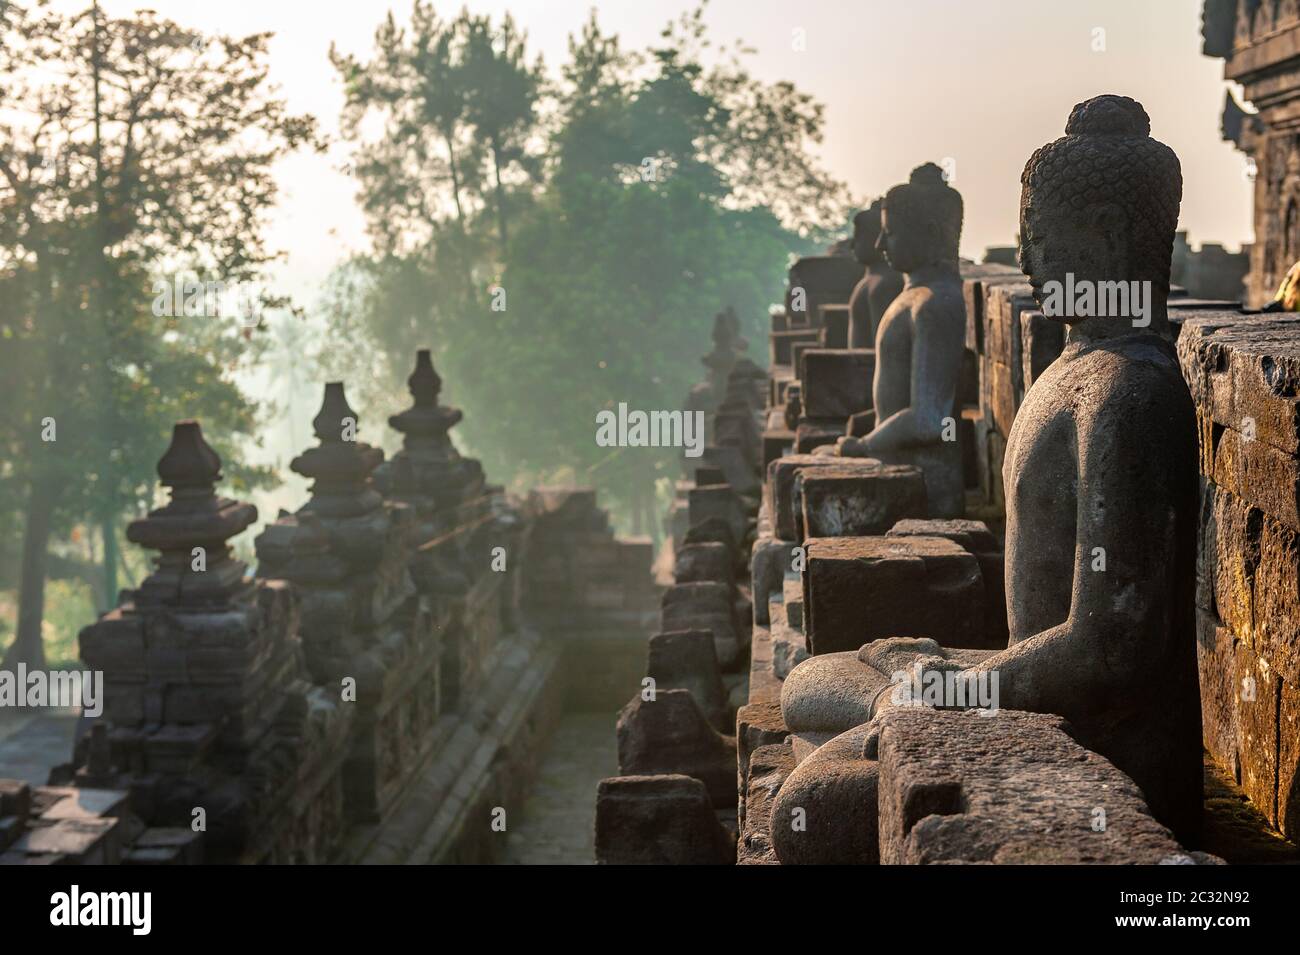 Tempio di Borobudur a sunrise, Java, Indonesia Foto Stock